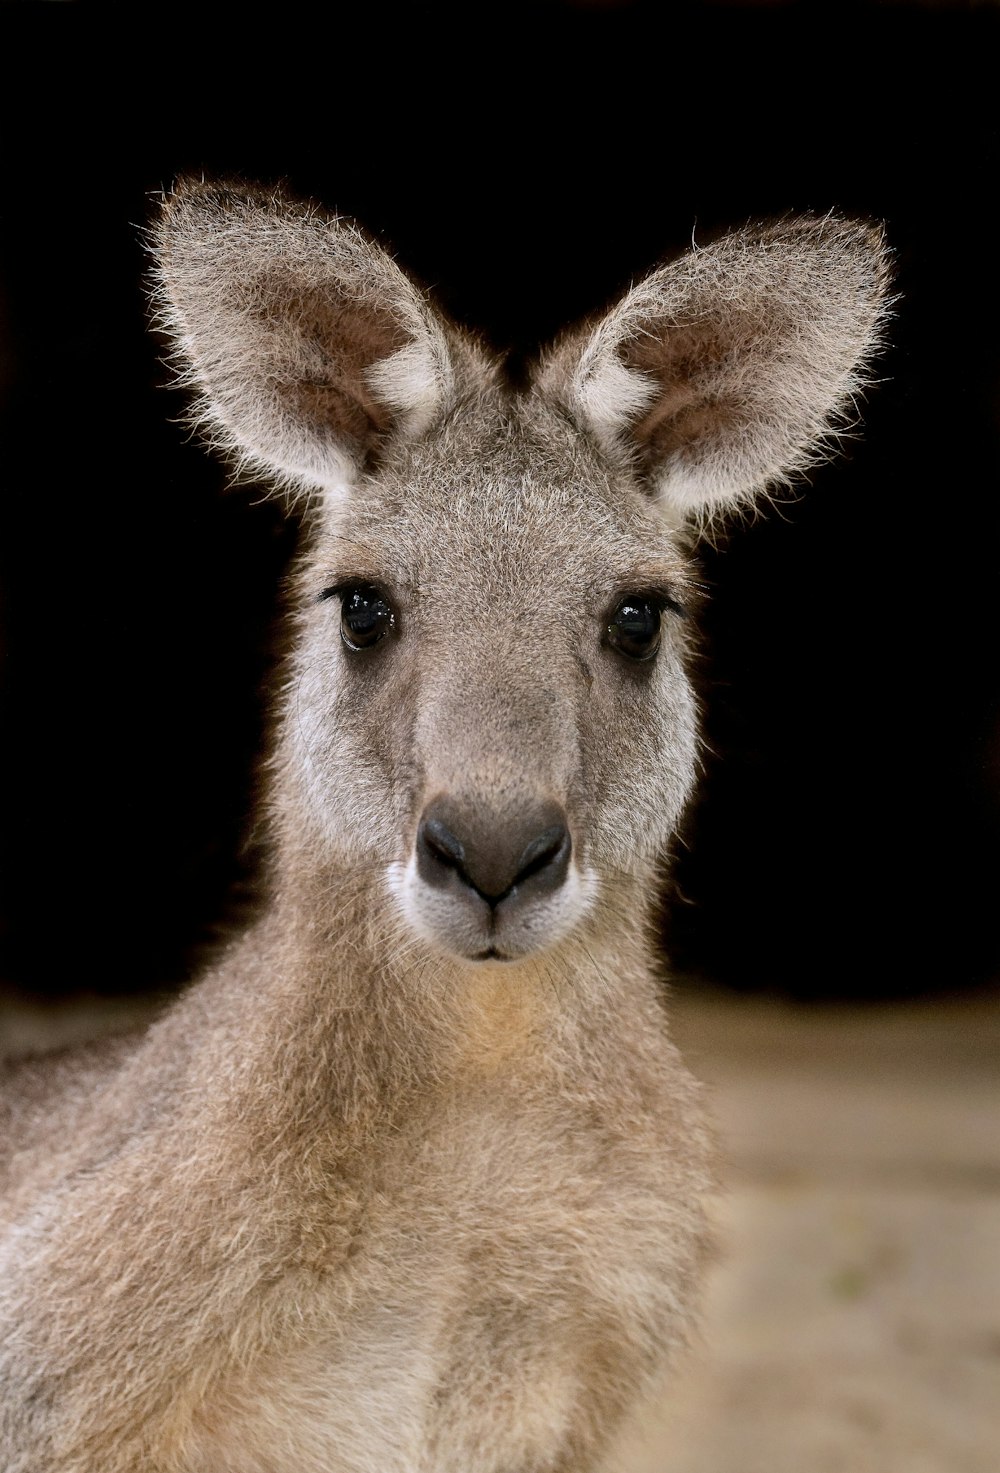 1K+ Australian Animal Pictures | Download Free Images on Unsplash